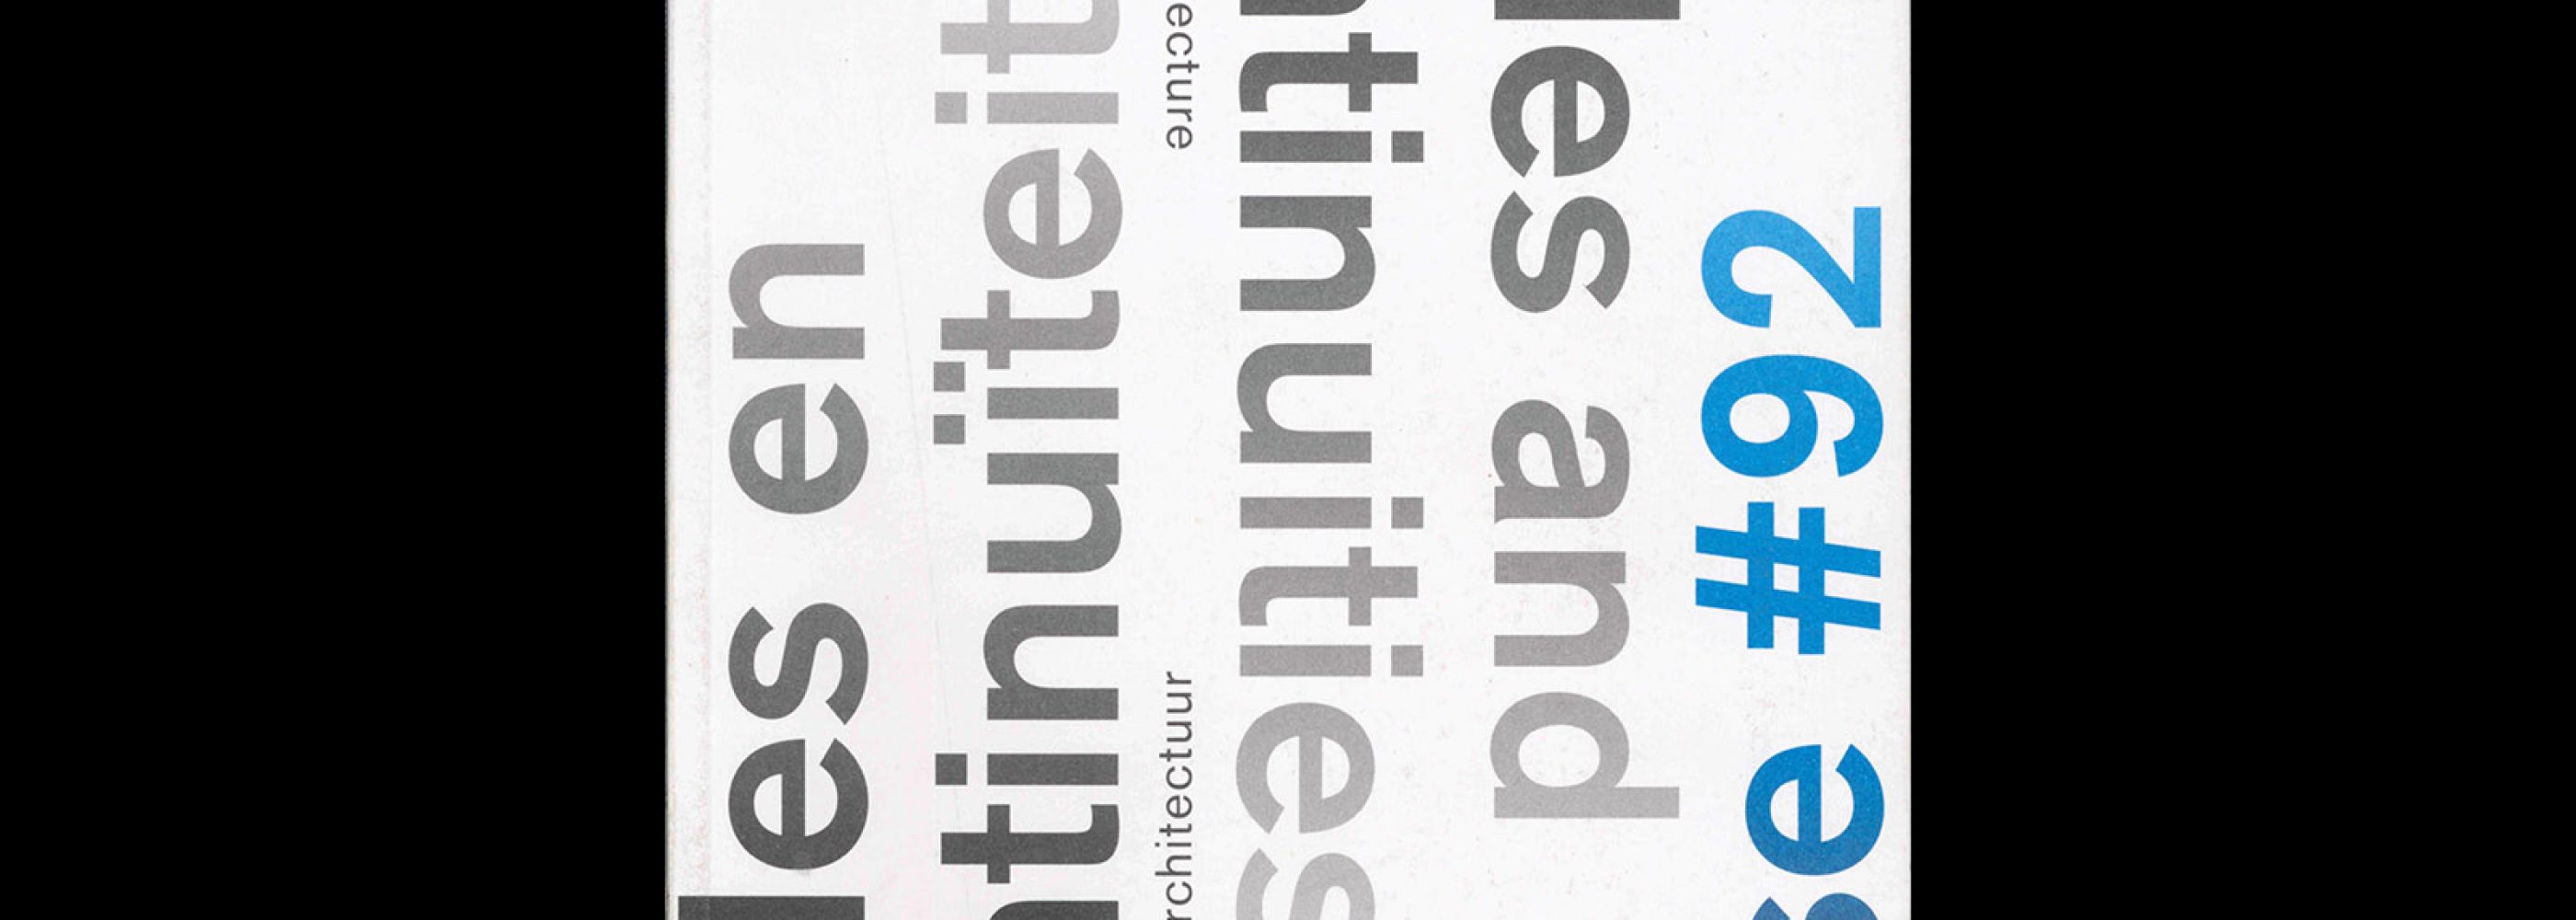 Oase 92, 2014, Codes and Continuities. Designed by Karel Martens & Aagje Martens, Werkplaats Typografie